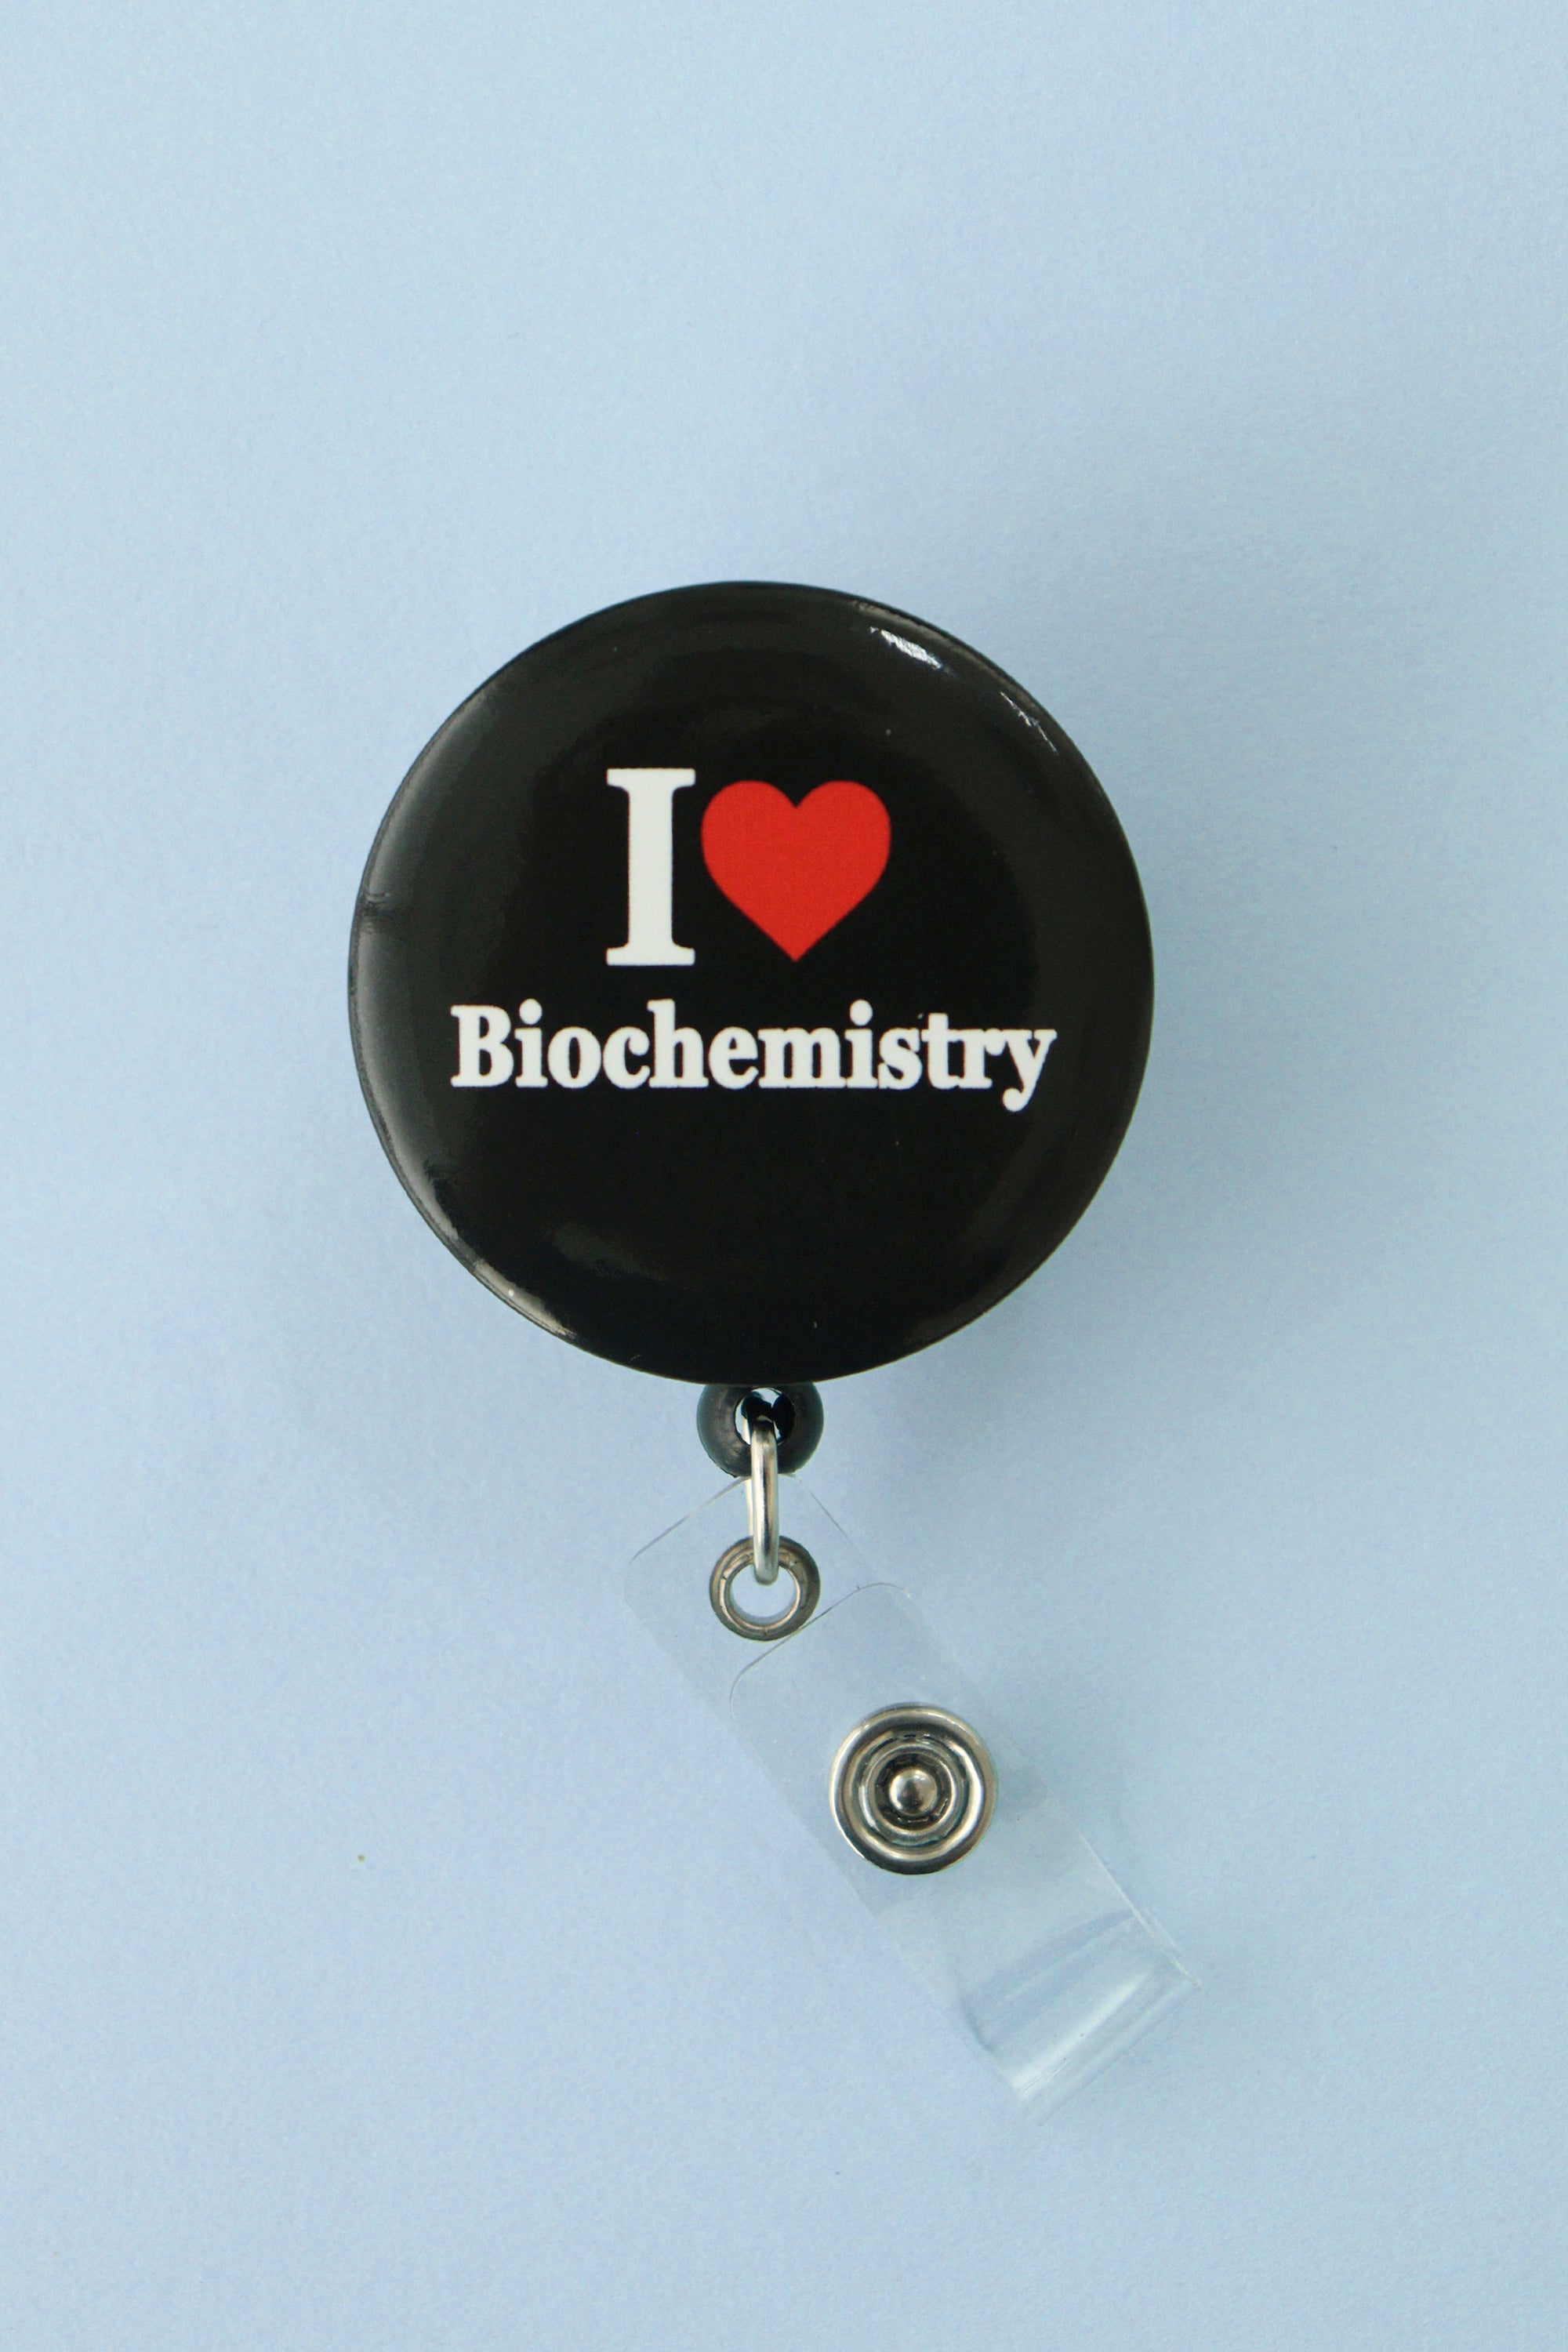 products-1biochemistry-jpg